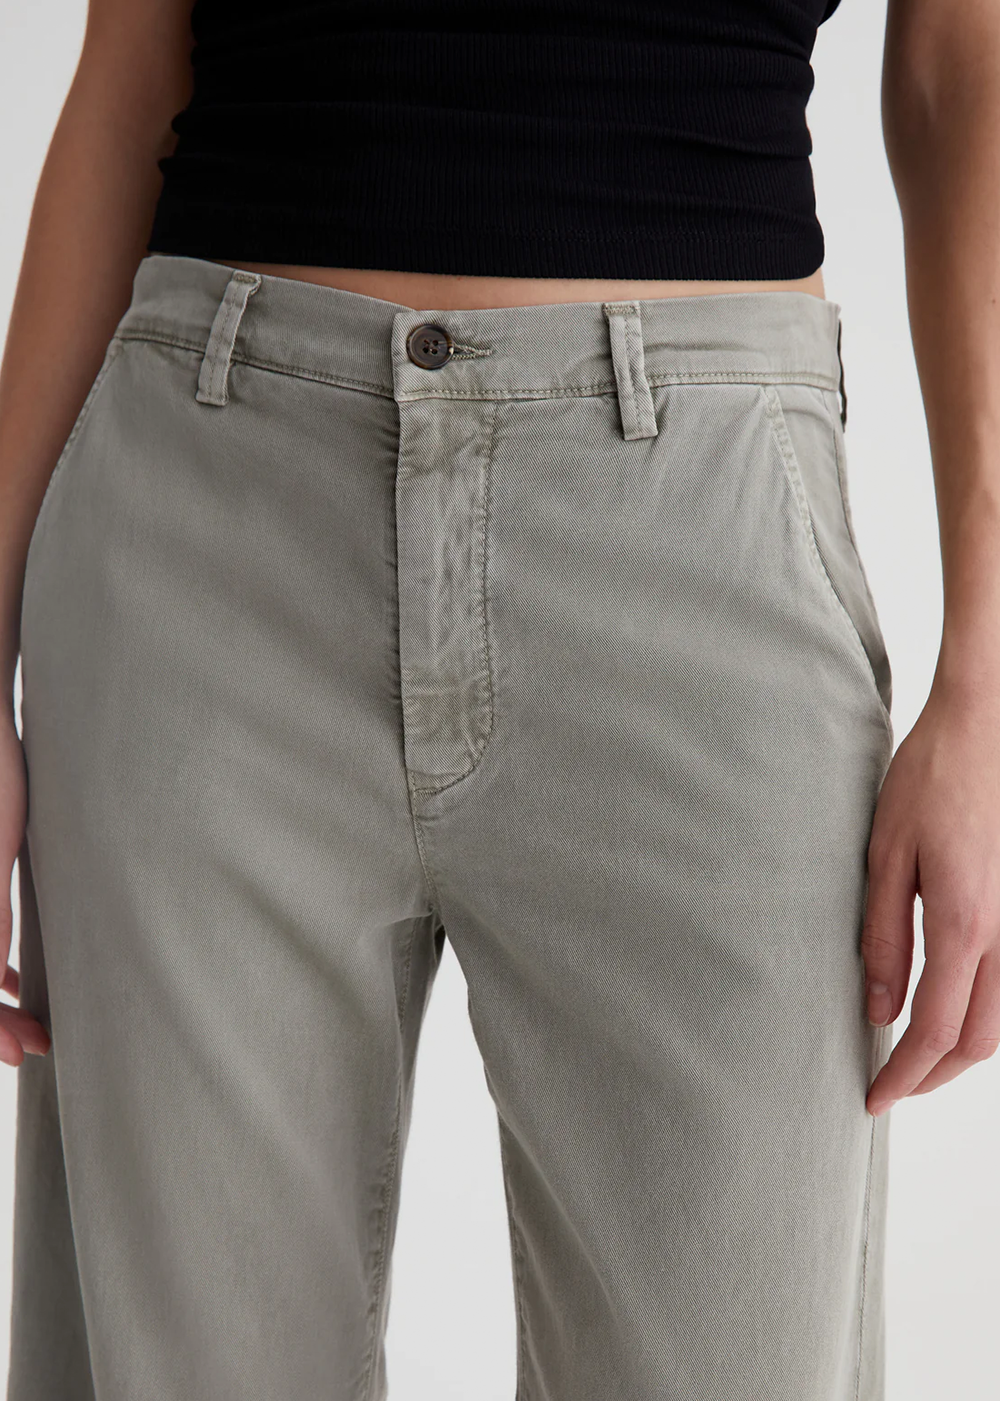 Caden Straight Leg Trouser - Sulfur Dried Parsley - AG Jeans - Danali - ETW1E56SLDPAR